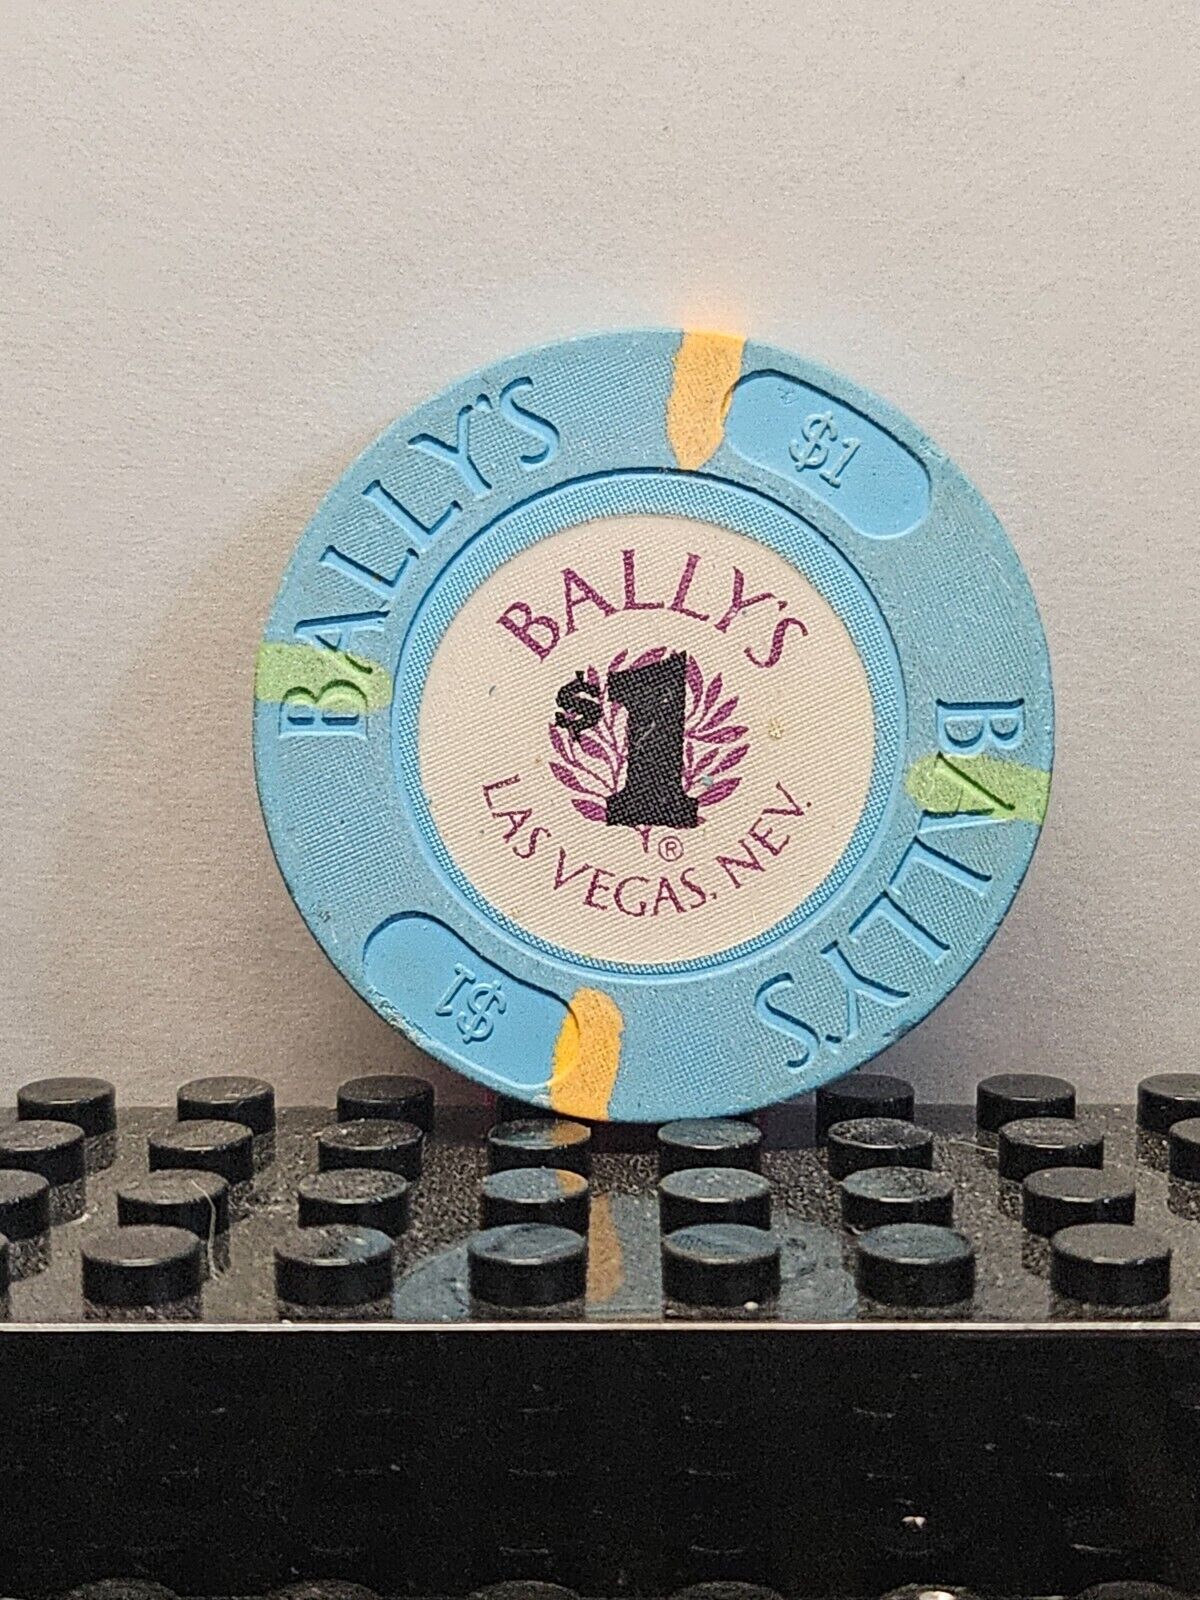 $1 Bally's Casino Chip - Las Vegas, NV